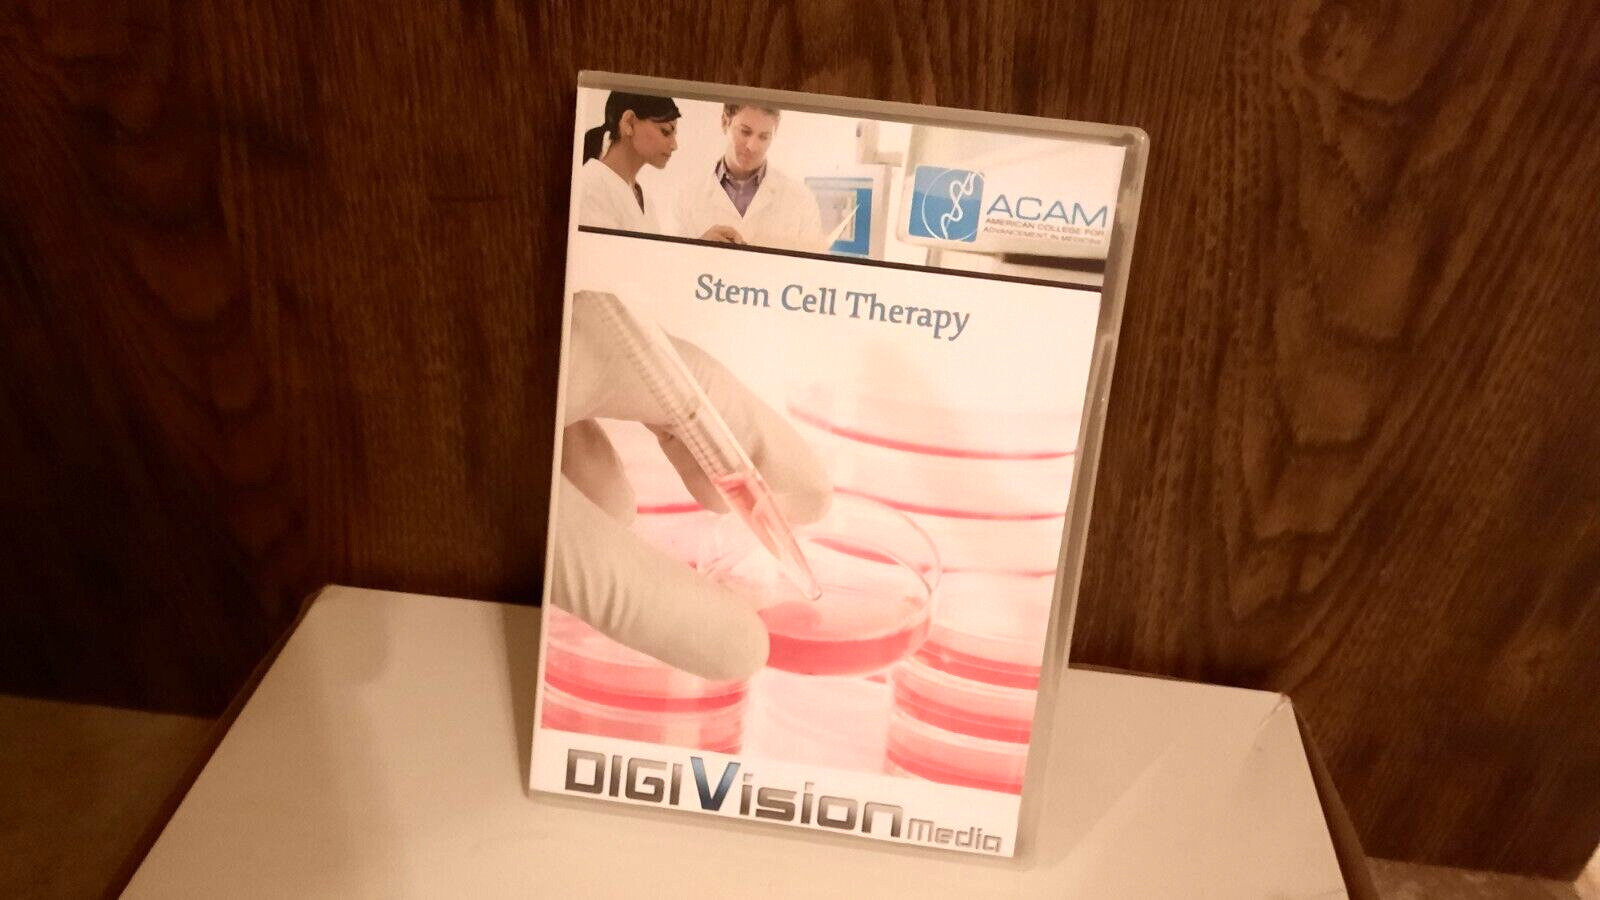 Stem Cell Therapy. Presentation, Education, Medicine, ACAM, DVD/ROM